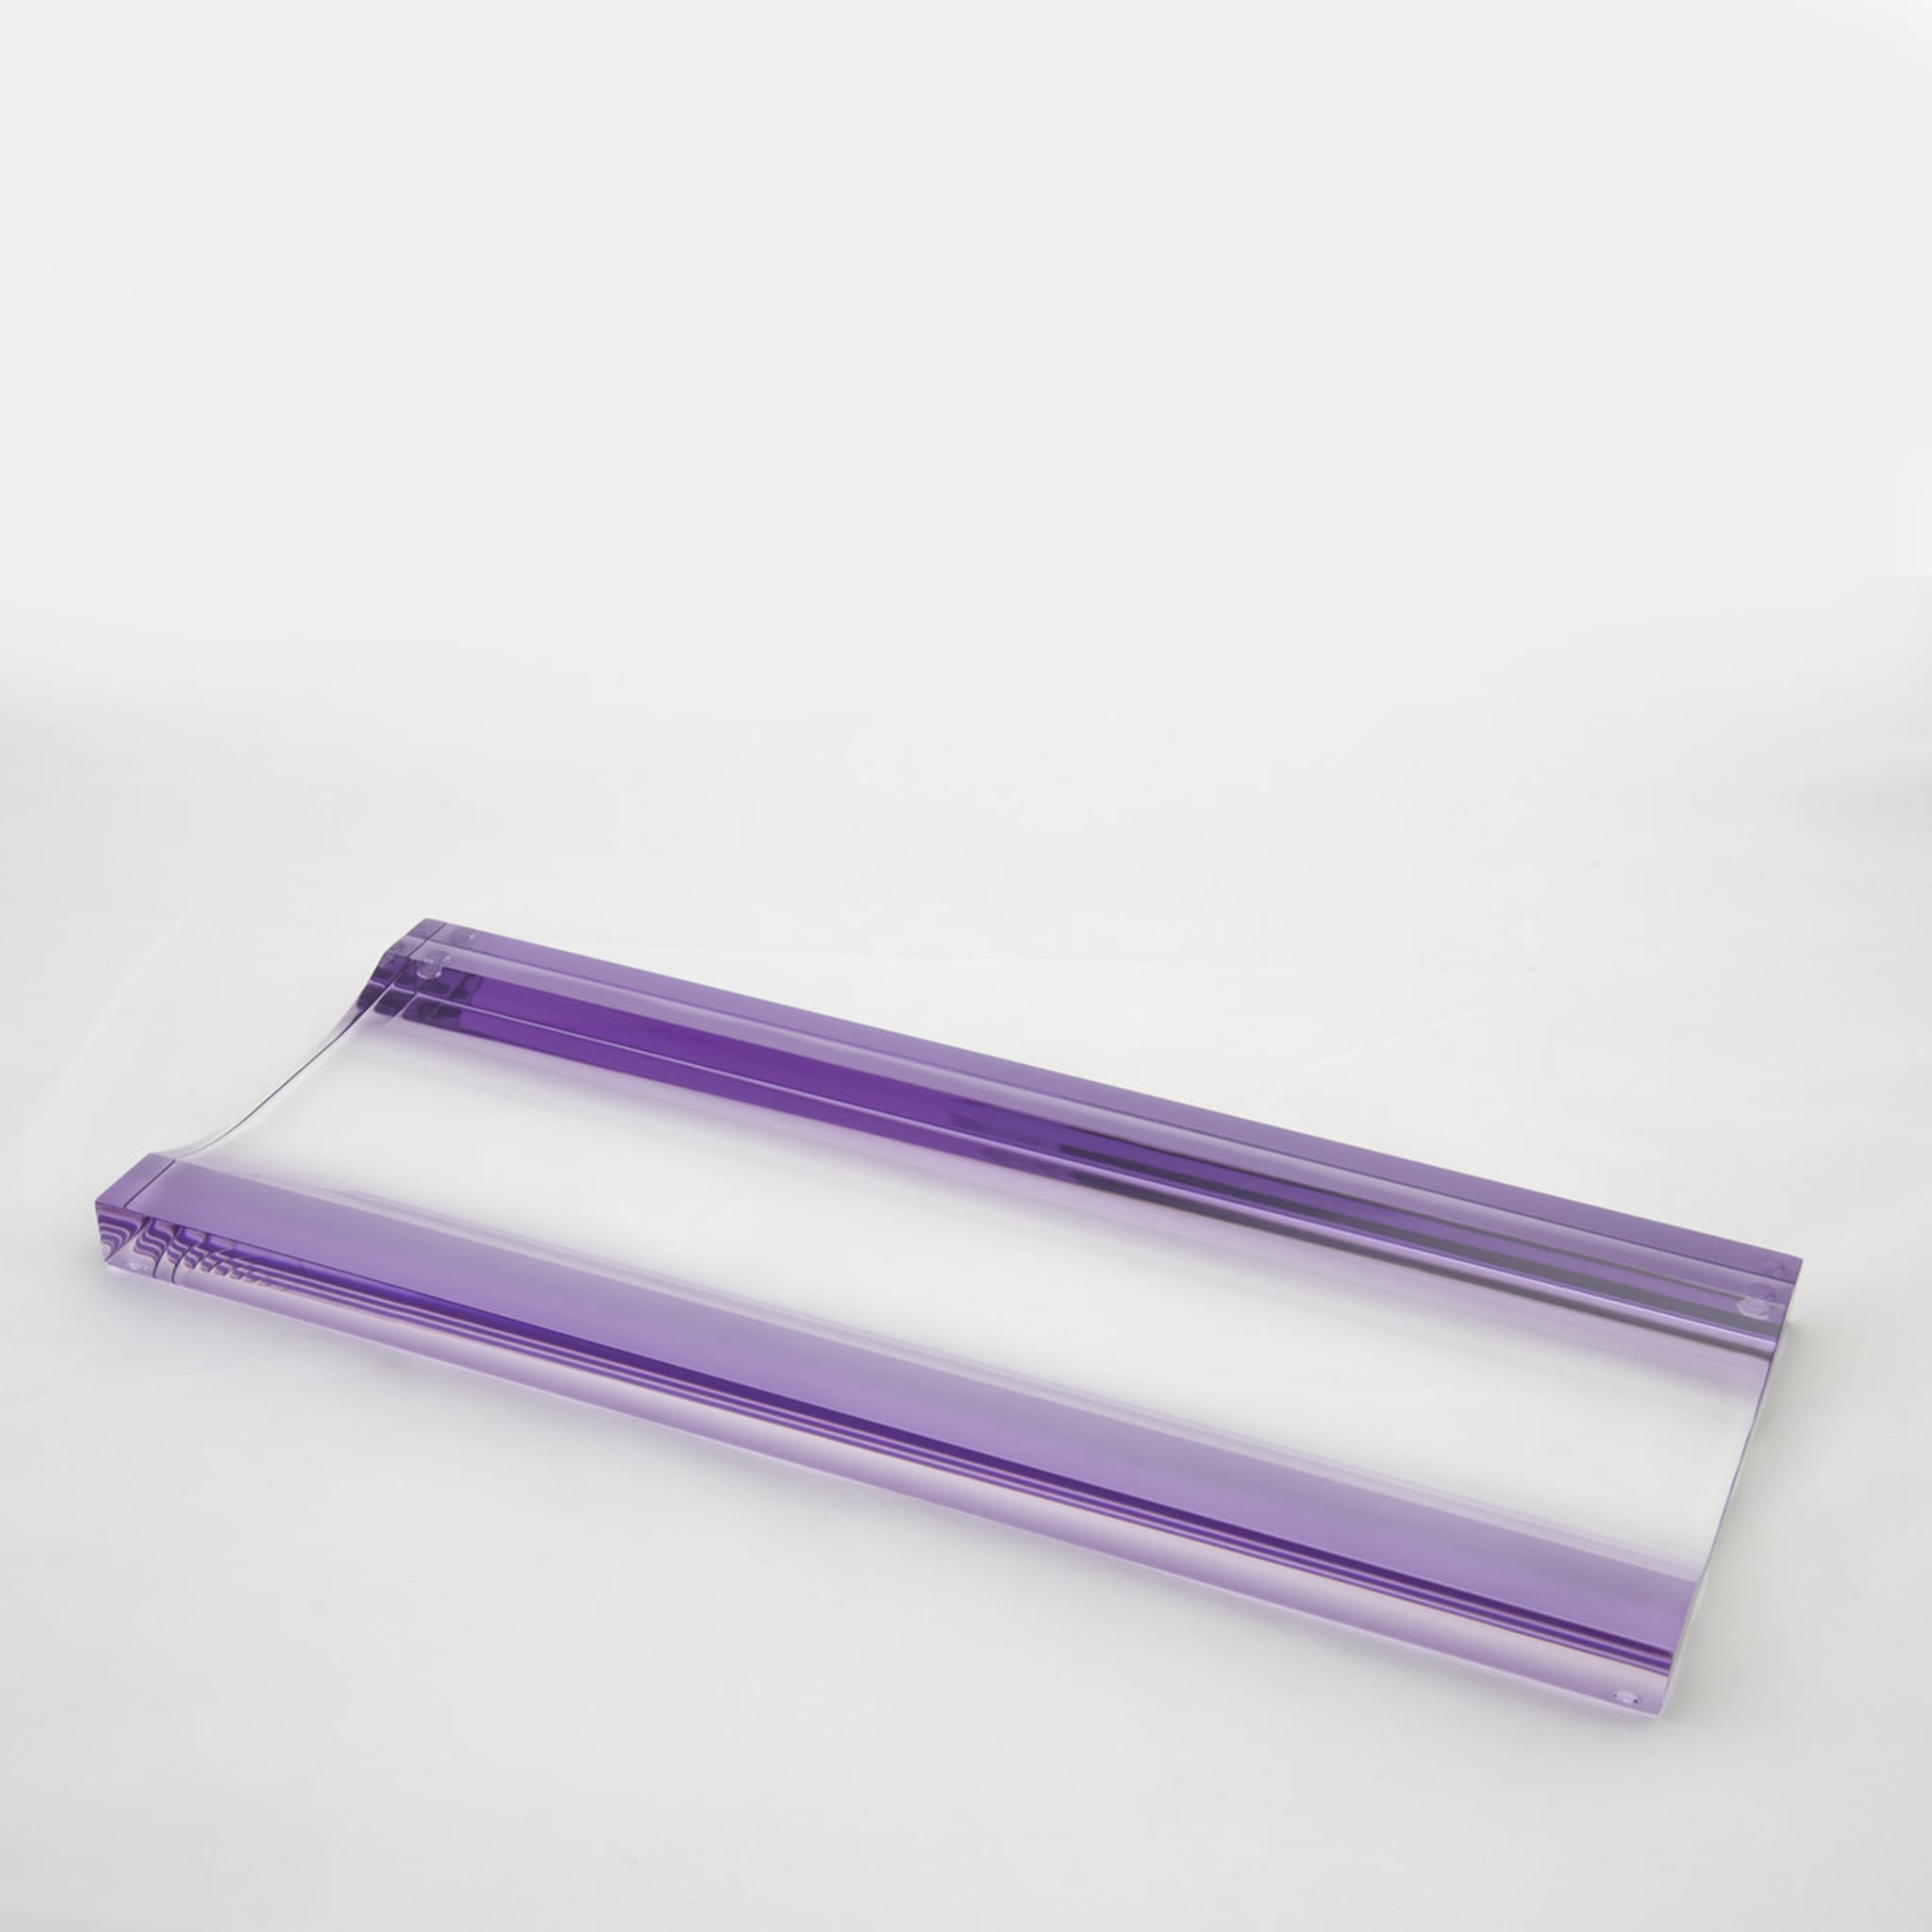 Lento T Tray Purple - Alternative view 1